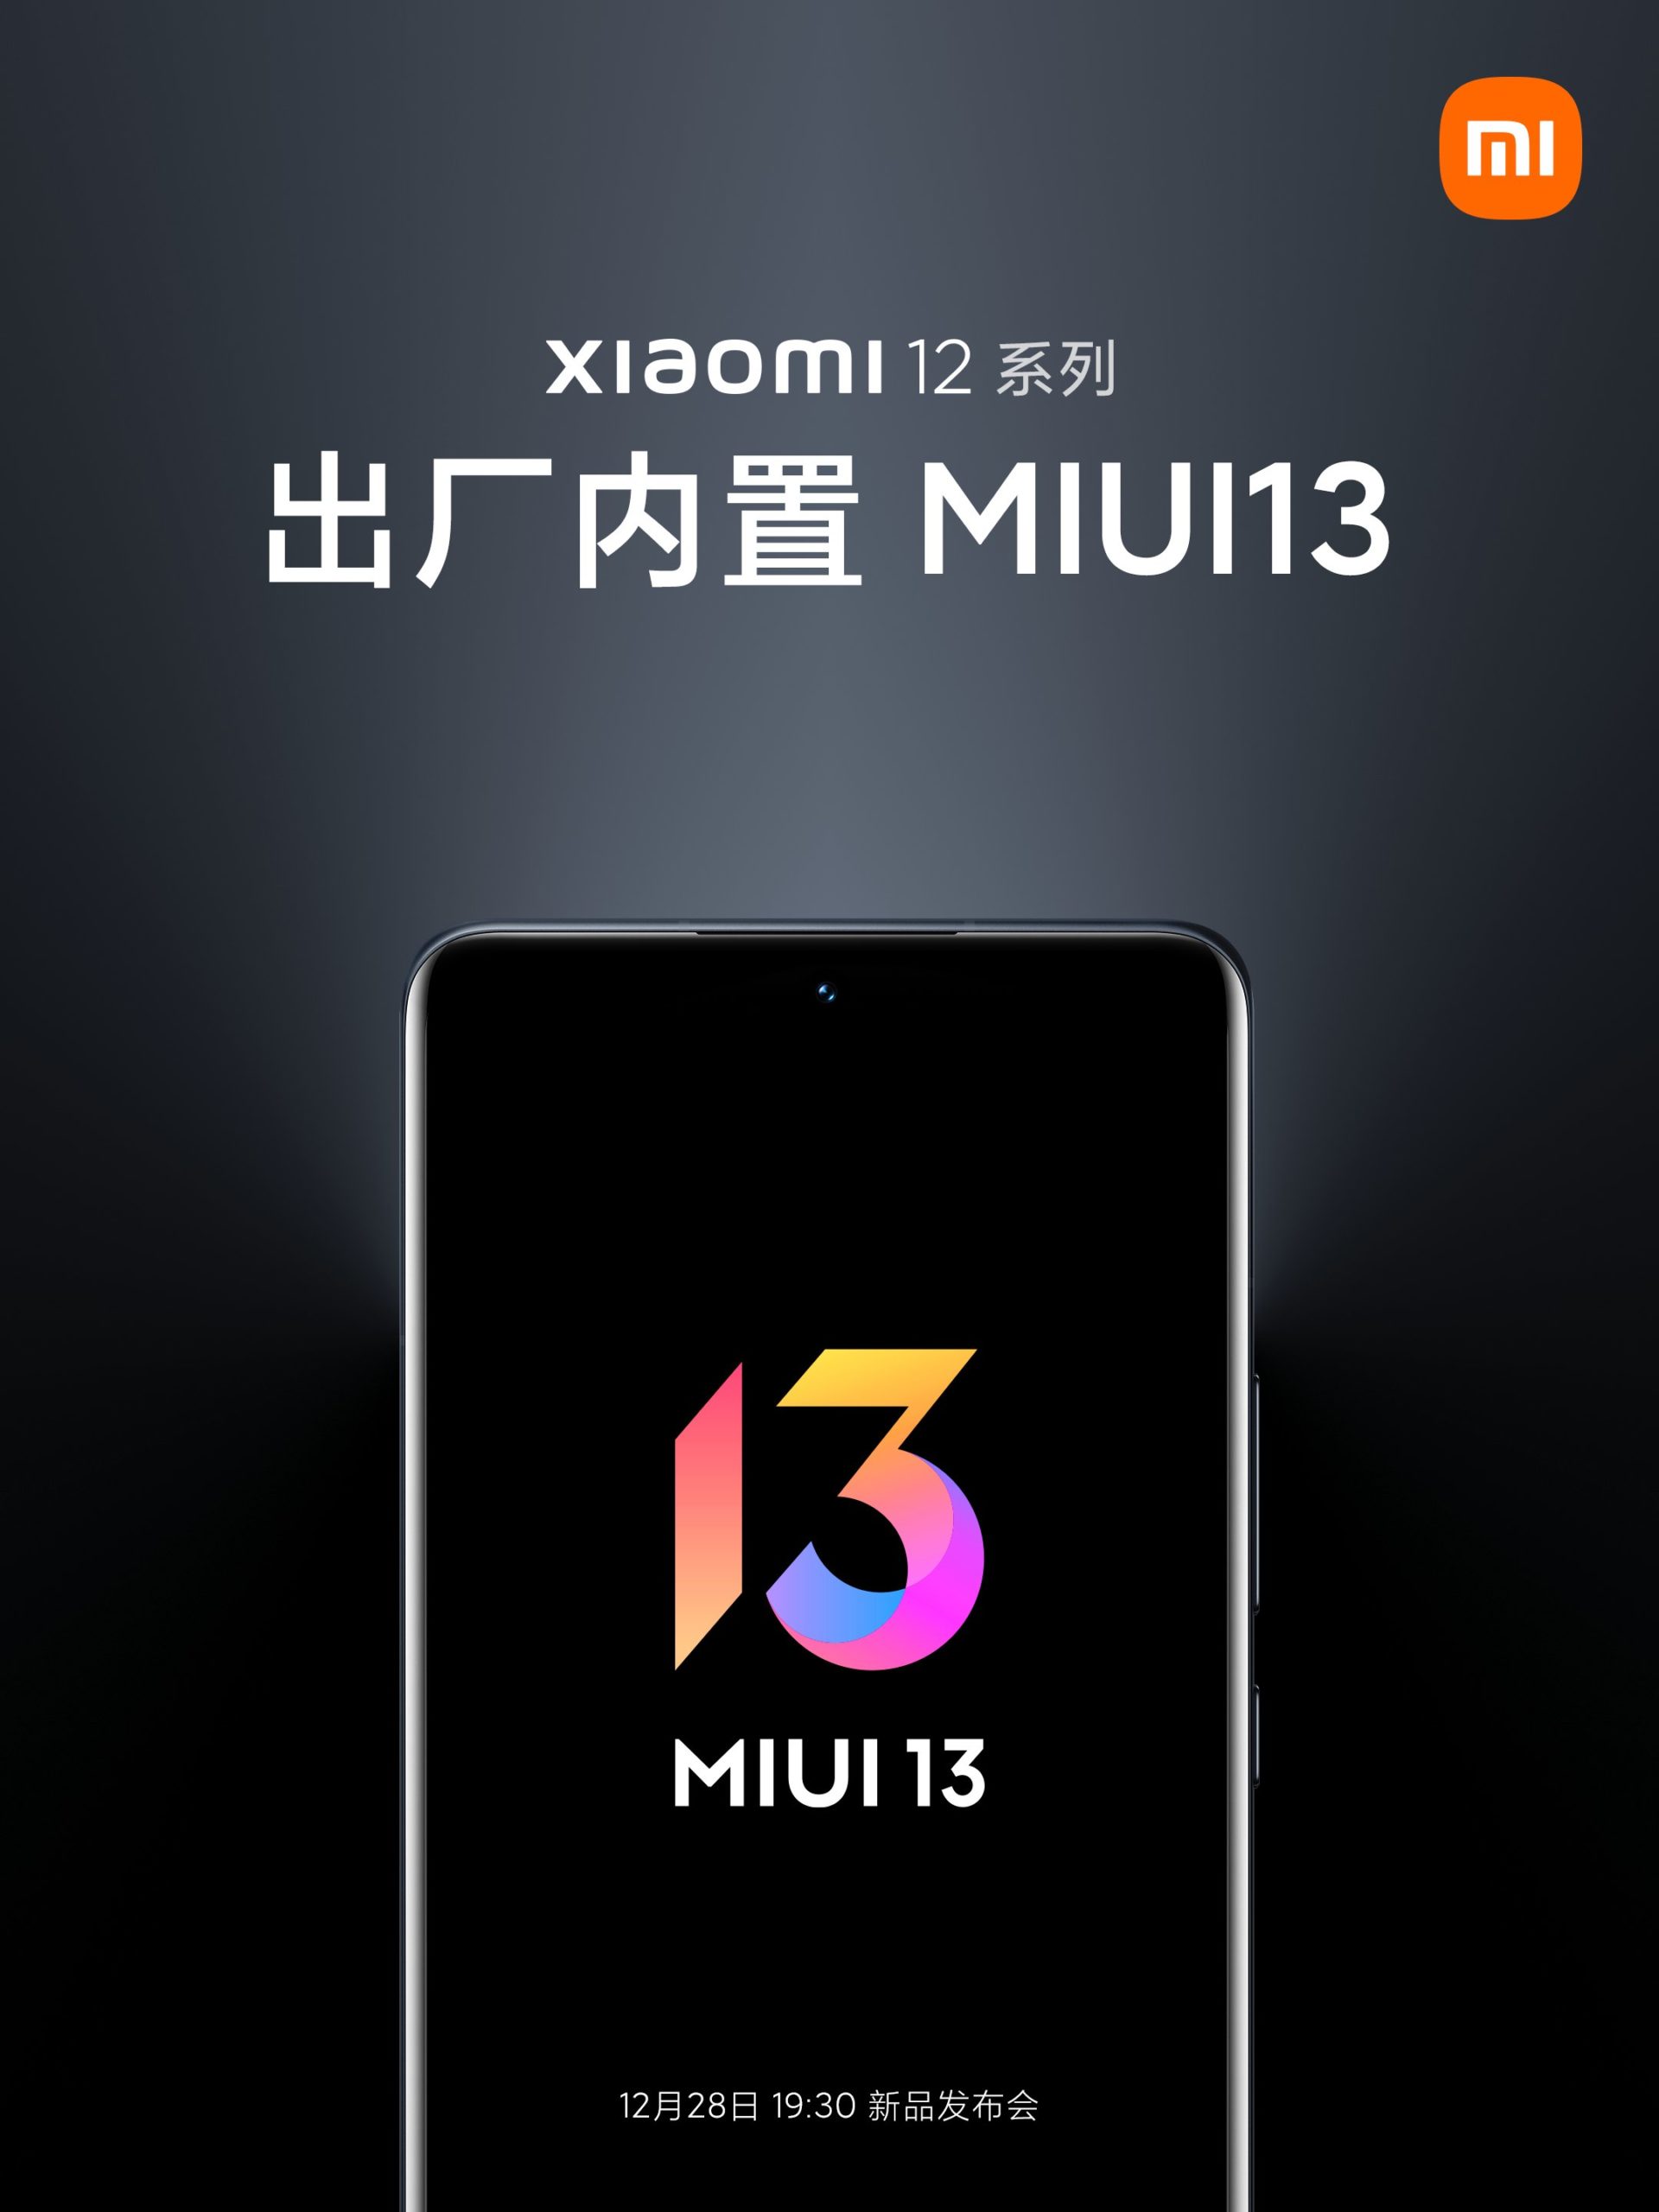 Xiaomi เผยรายชื่อสมาร์ตโฟนที่จะได้รับการอัปเกรด MIUI 13